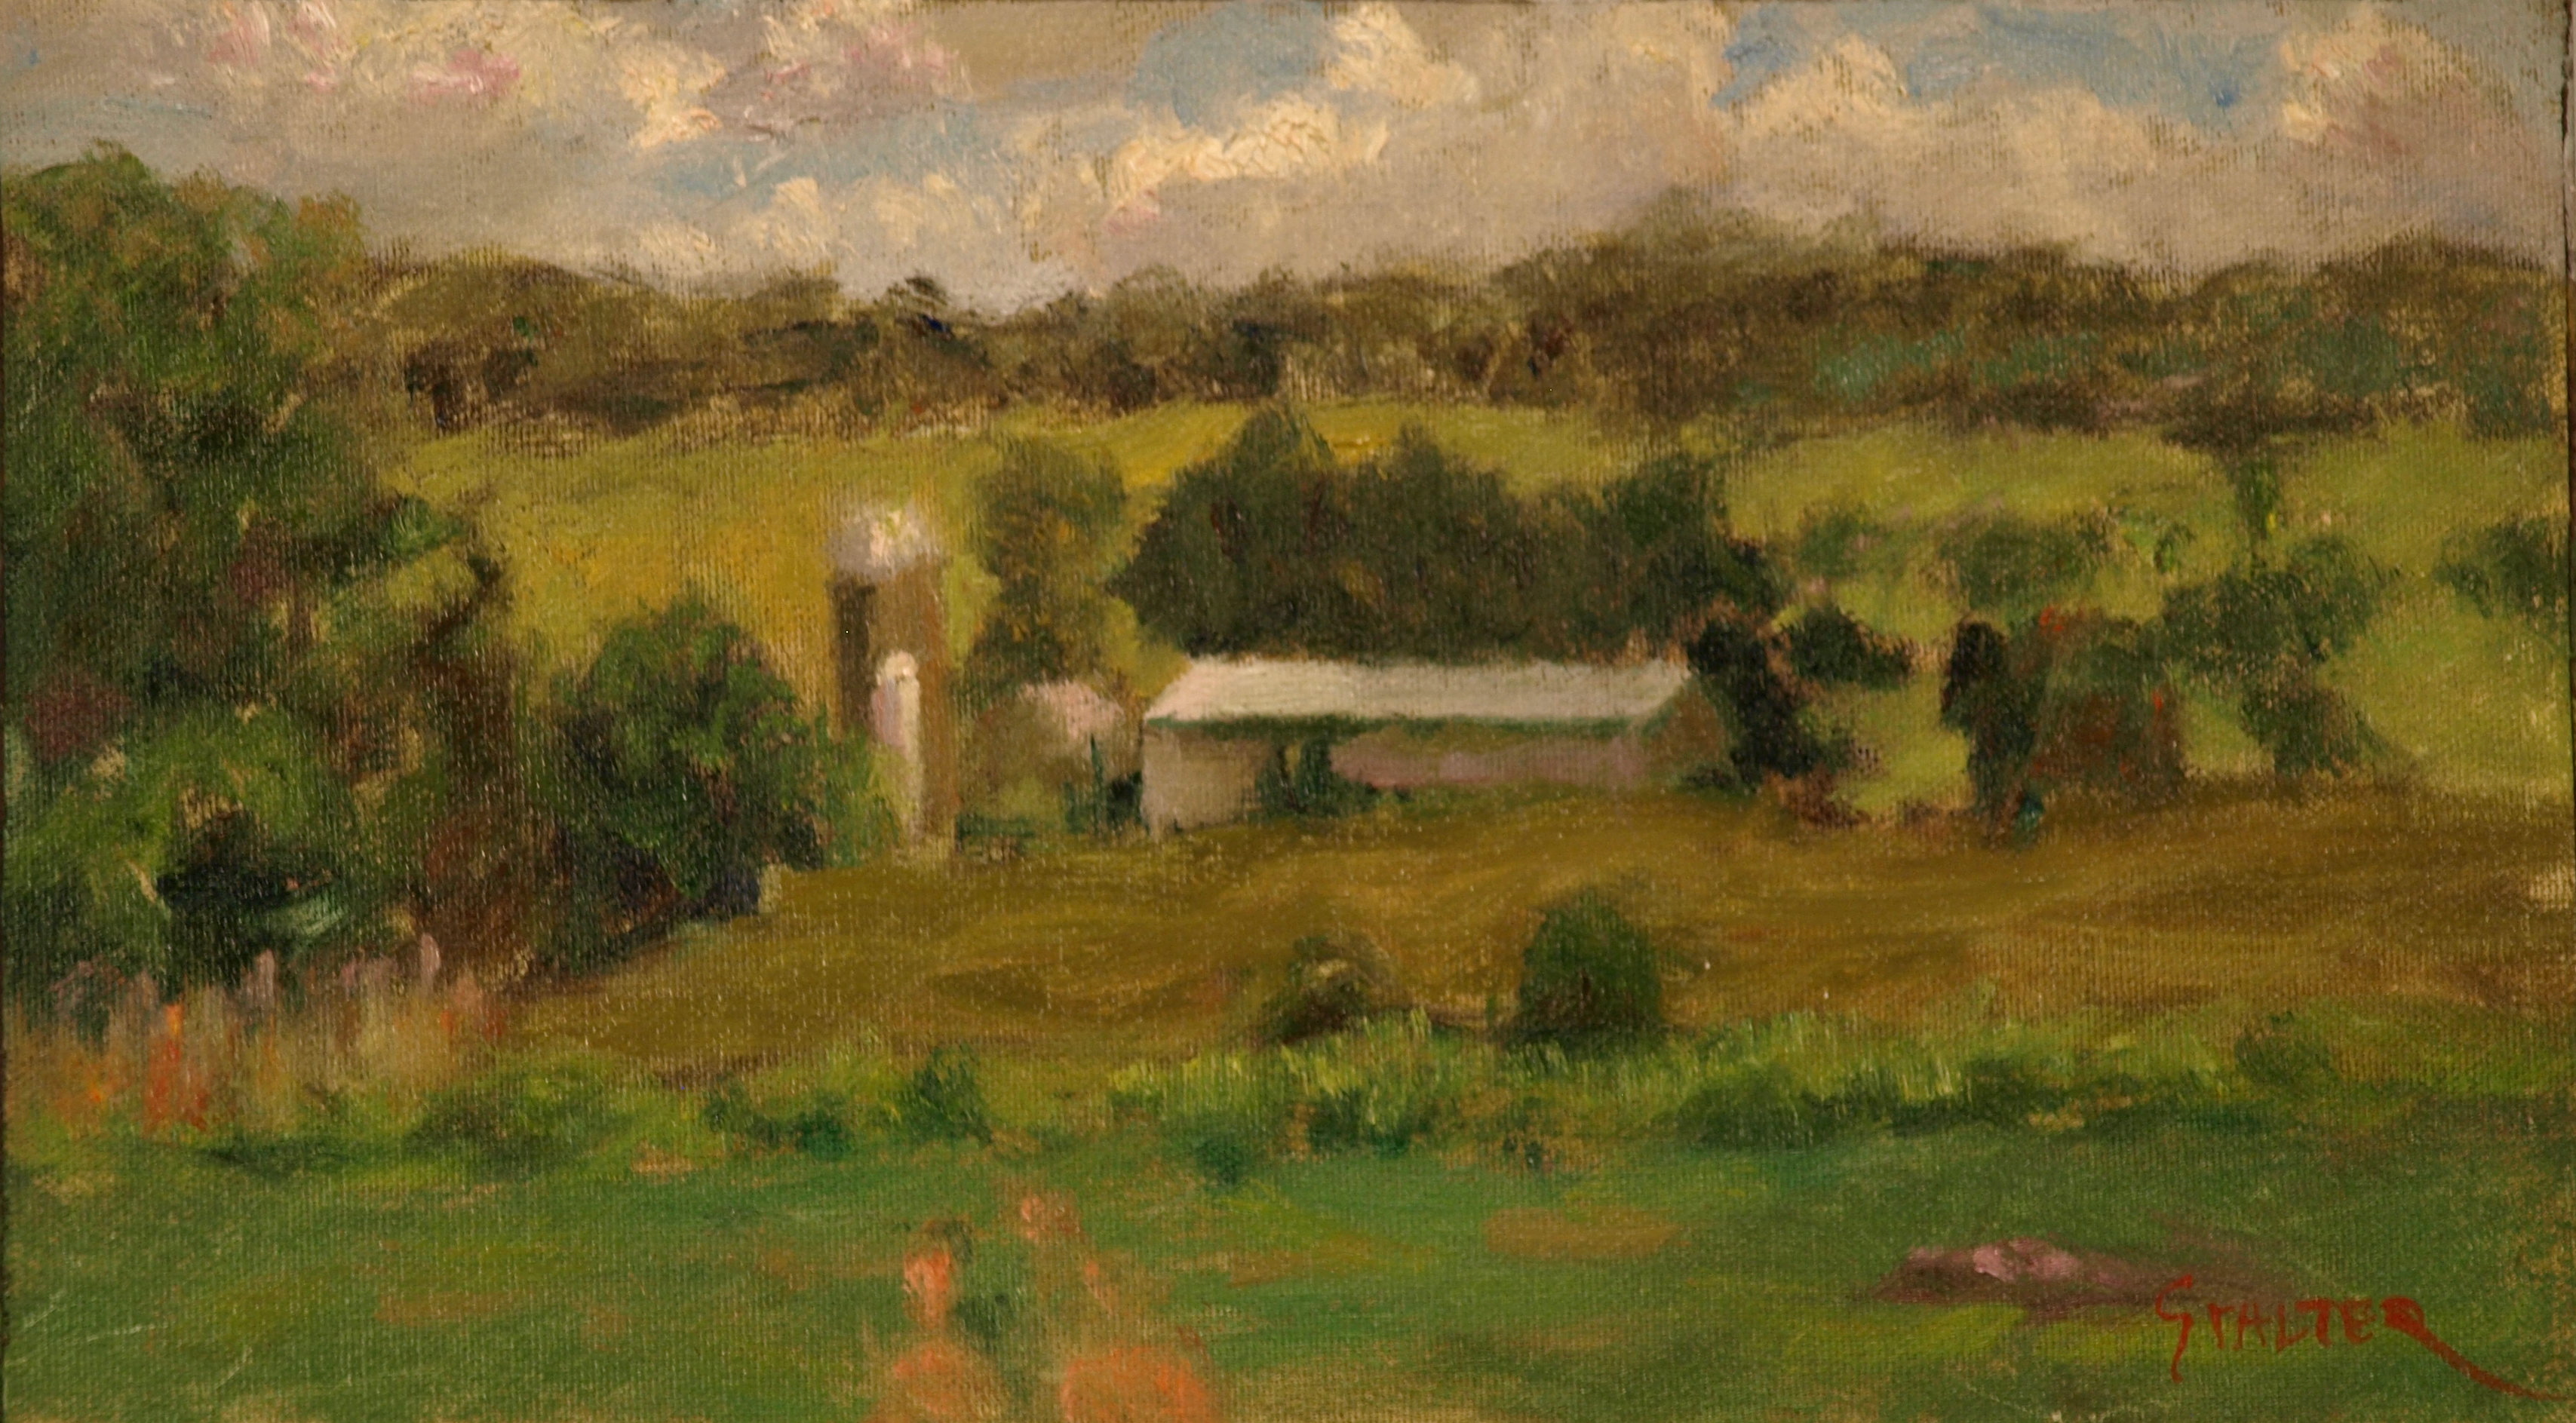 Farm near Amenia Union, Oil on Canvas on Panel, 8 x 14 Inches, by Richard Stalter, $225